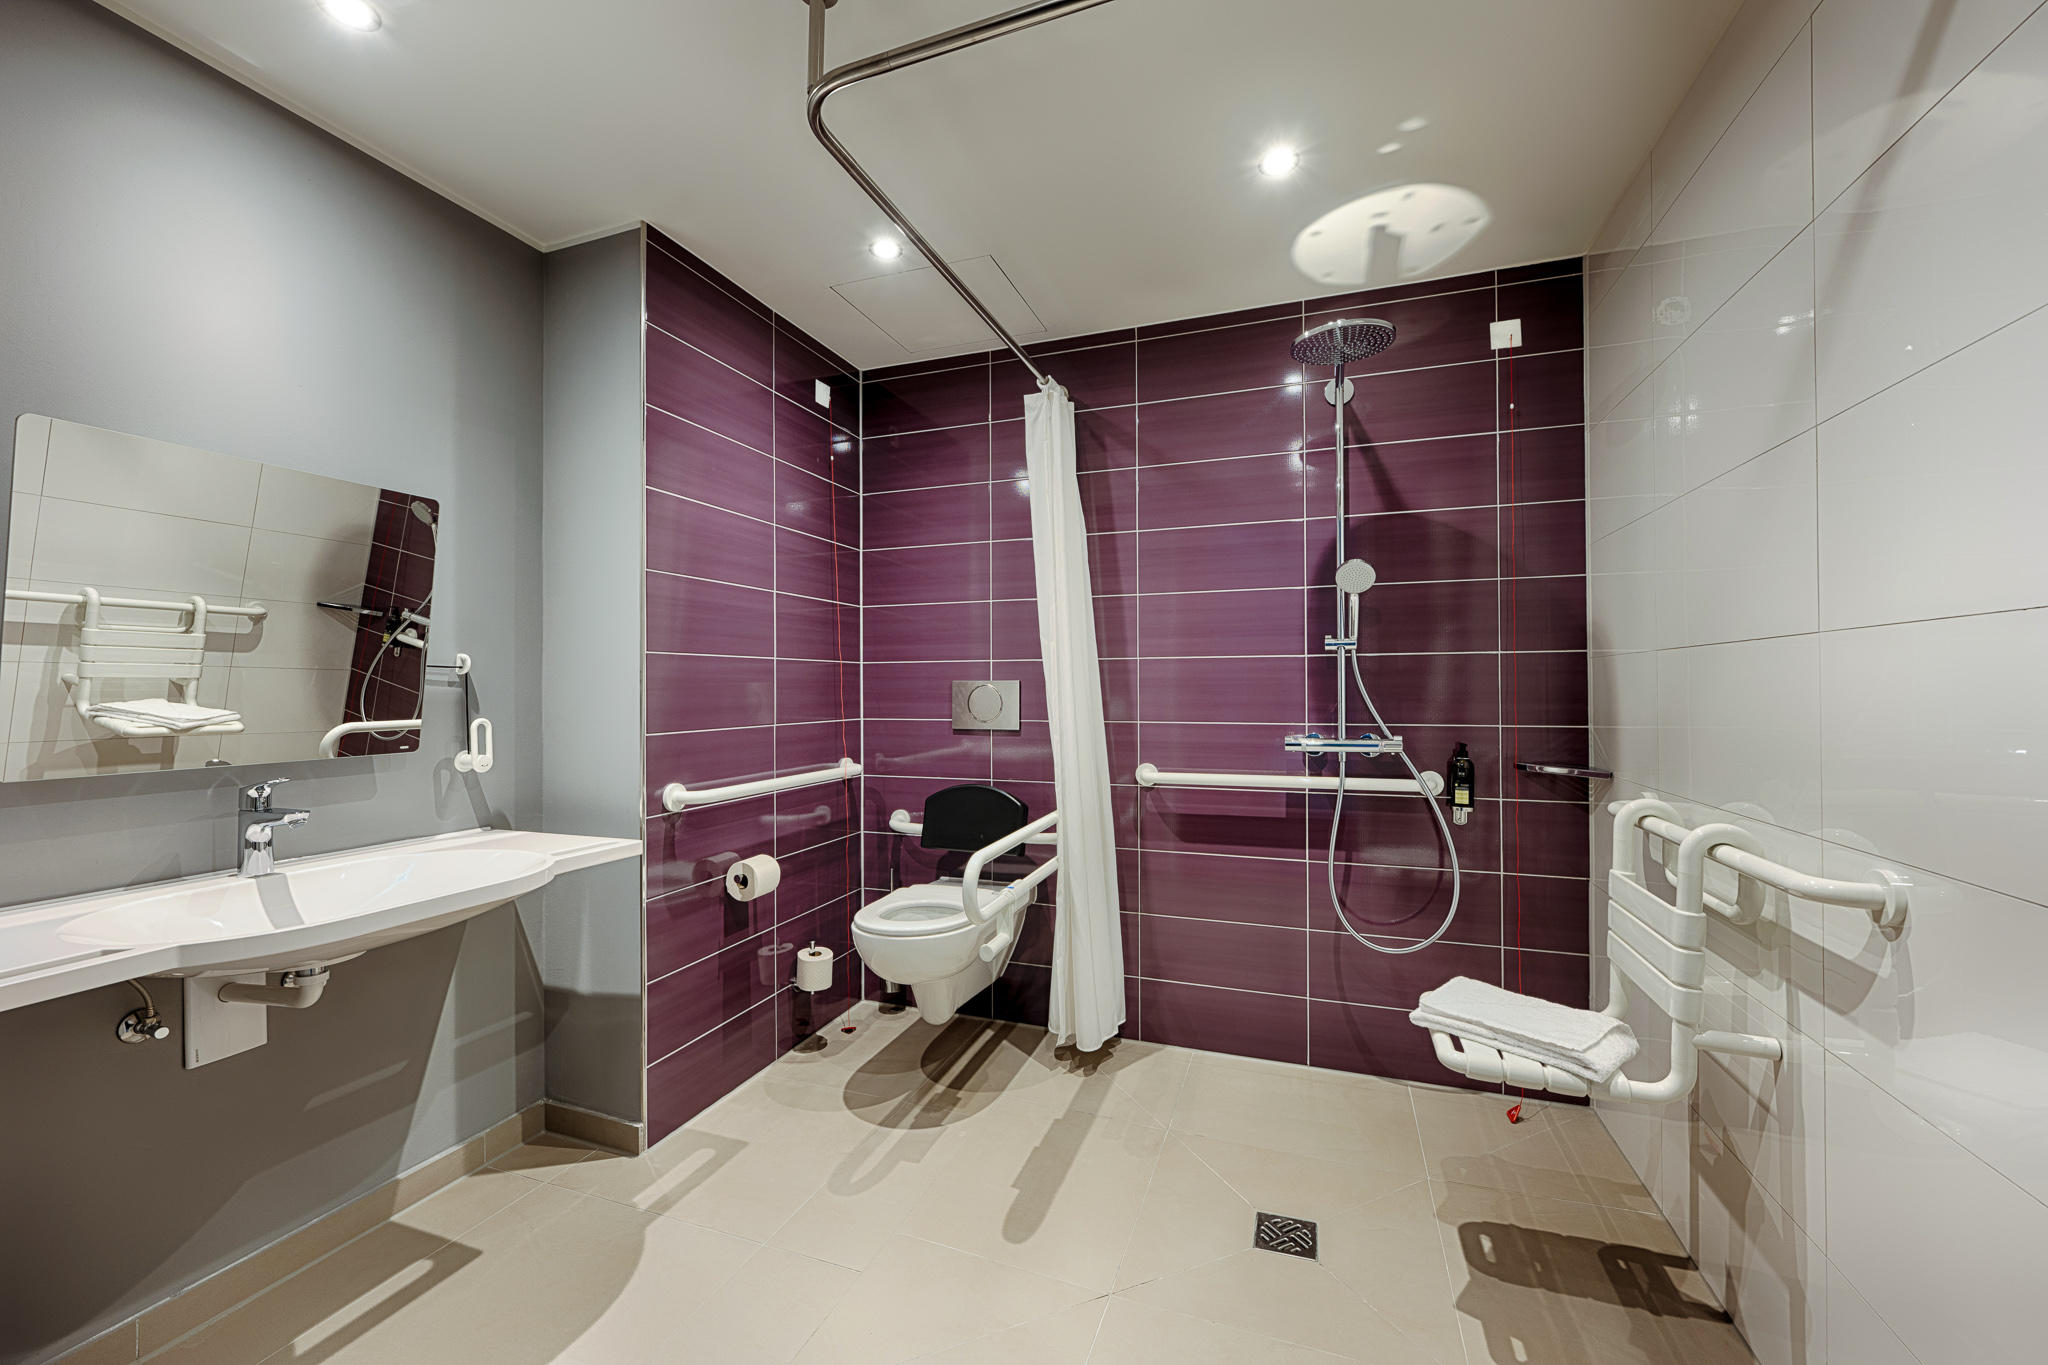 Premier Inn Hamburg City Klostertor hotel accessible wet room with walk in shower